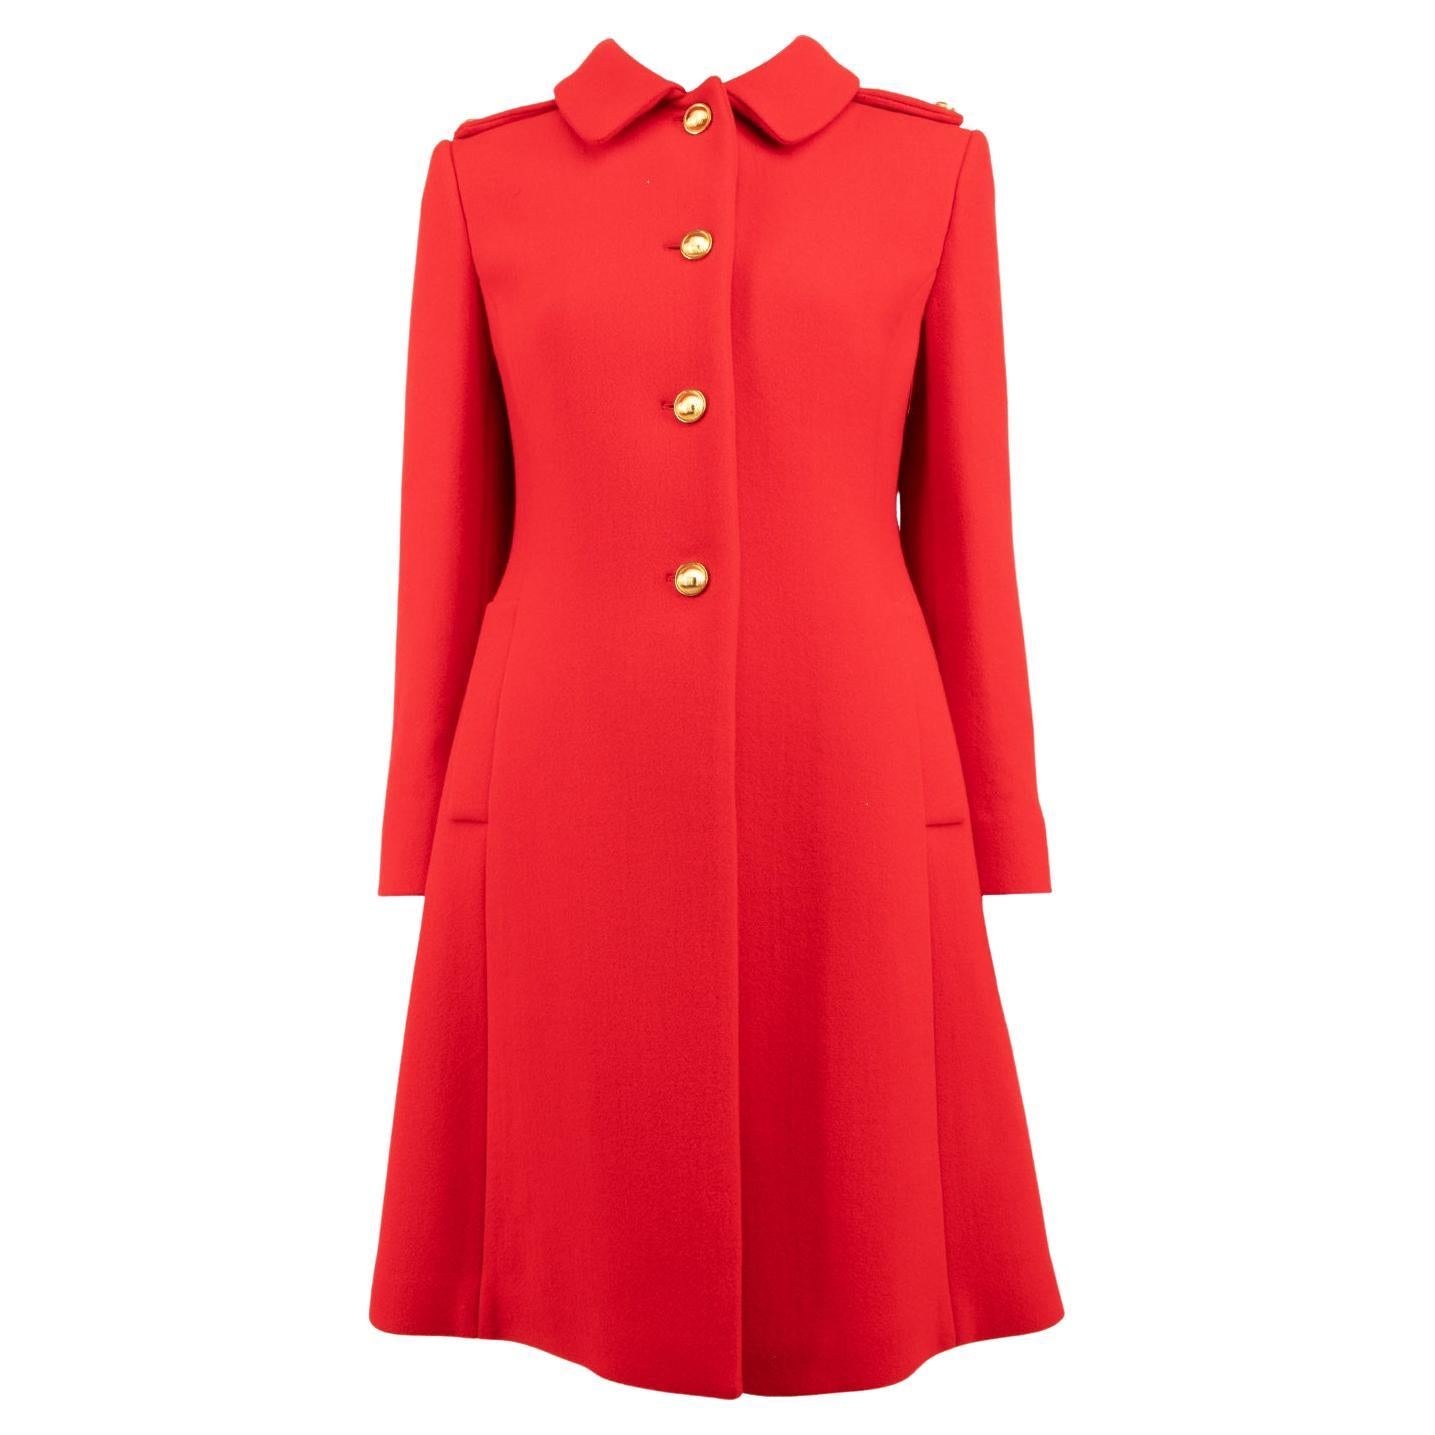 Miu Miu Women's Red Coat With Gold Buttons